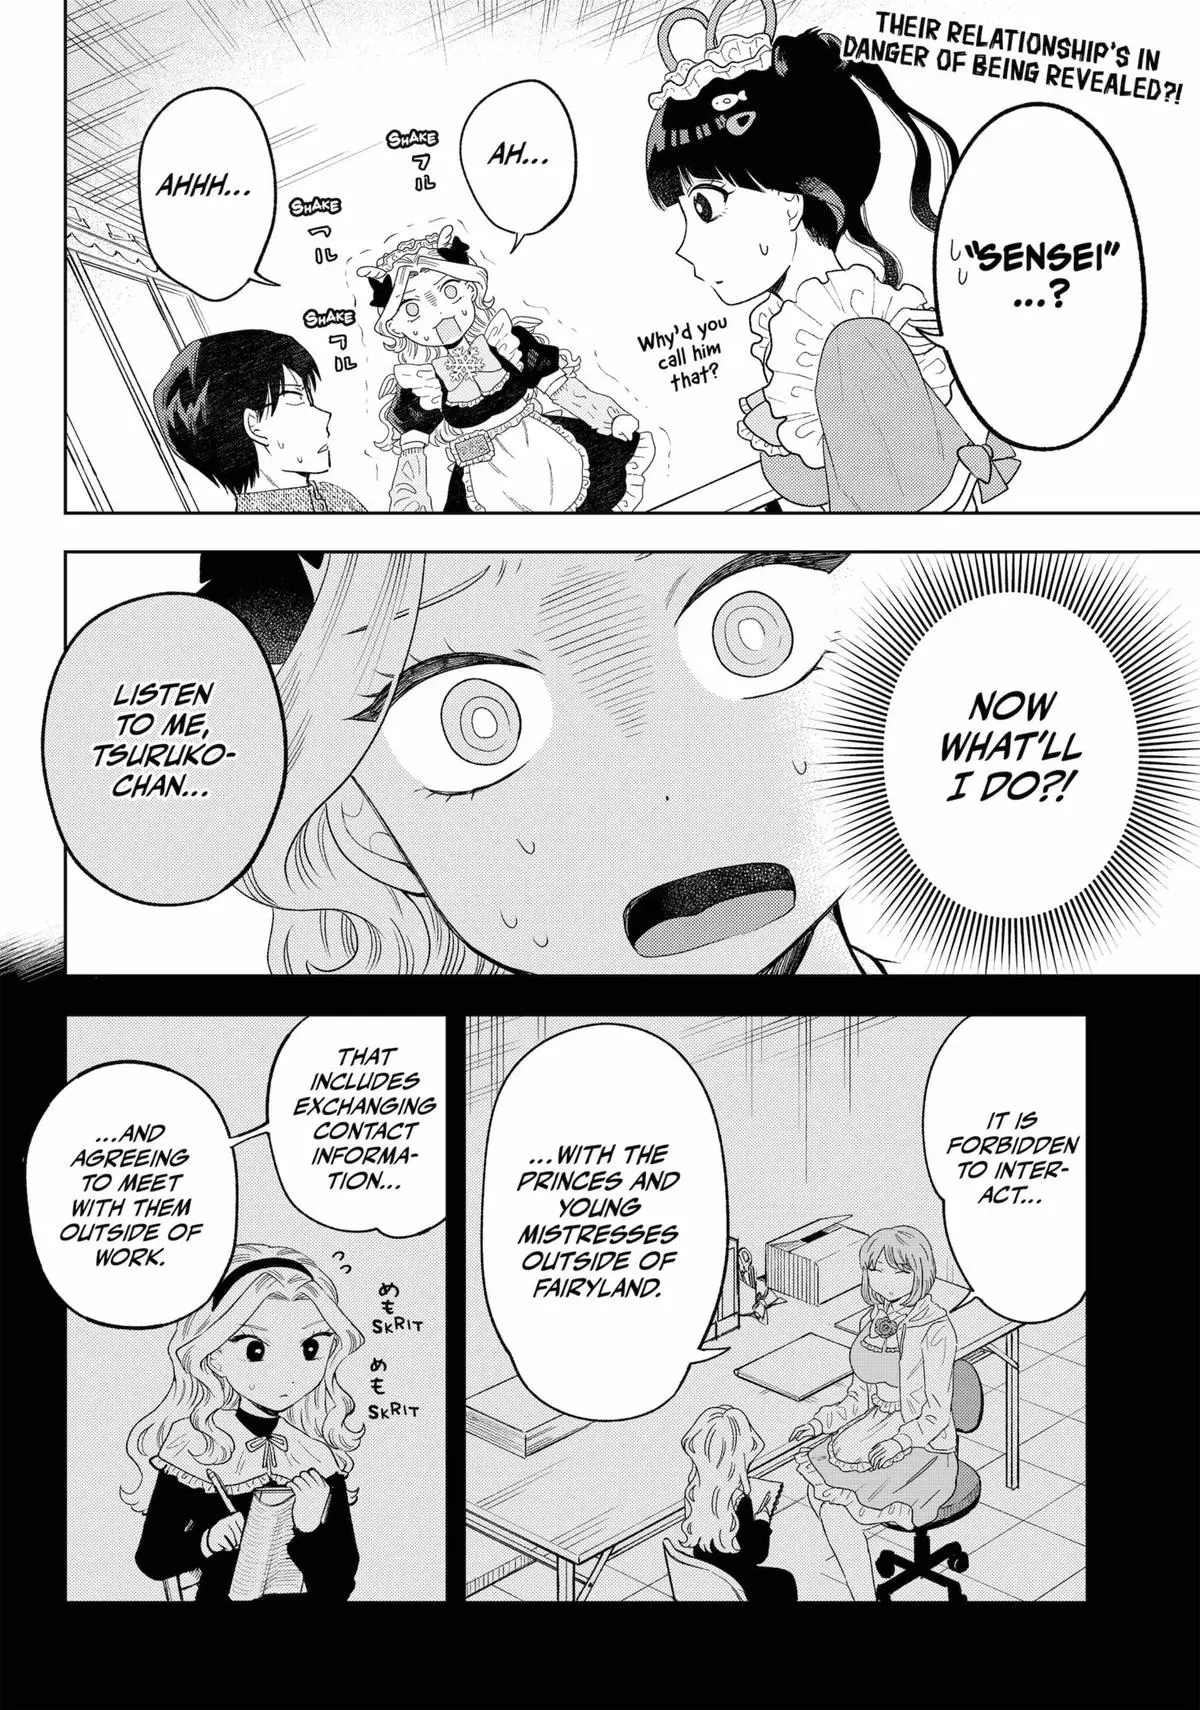 Tsuruko Returns The Favor - 12 page 4-0a1619dd